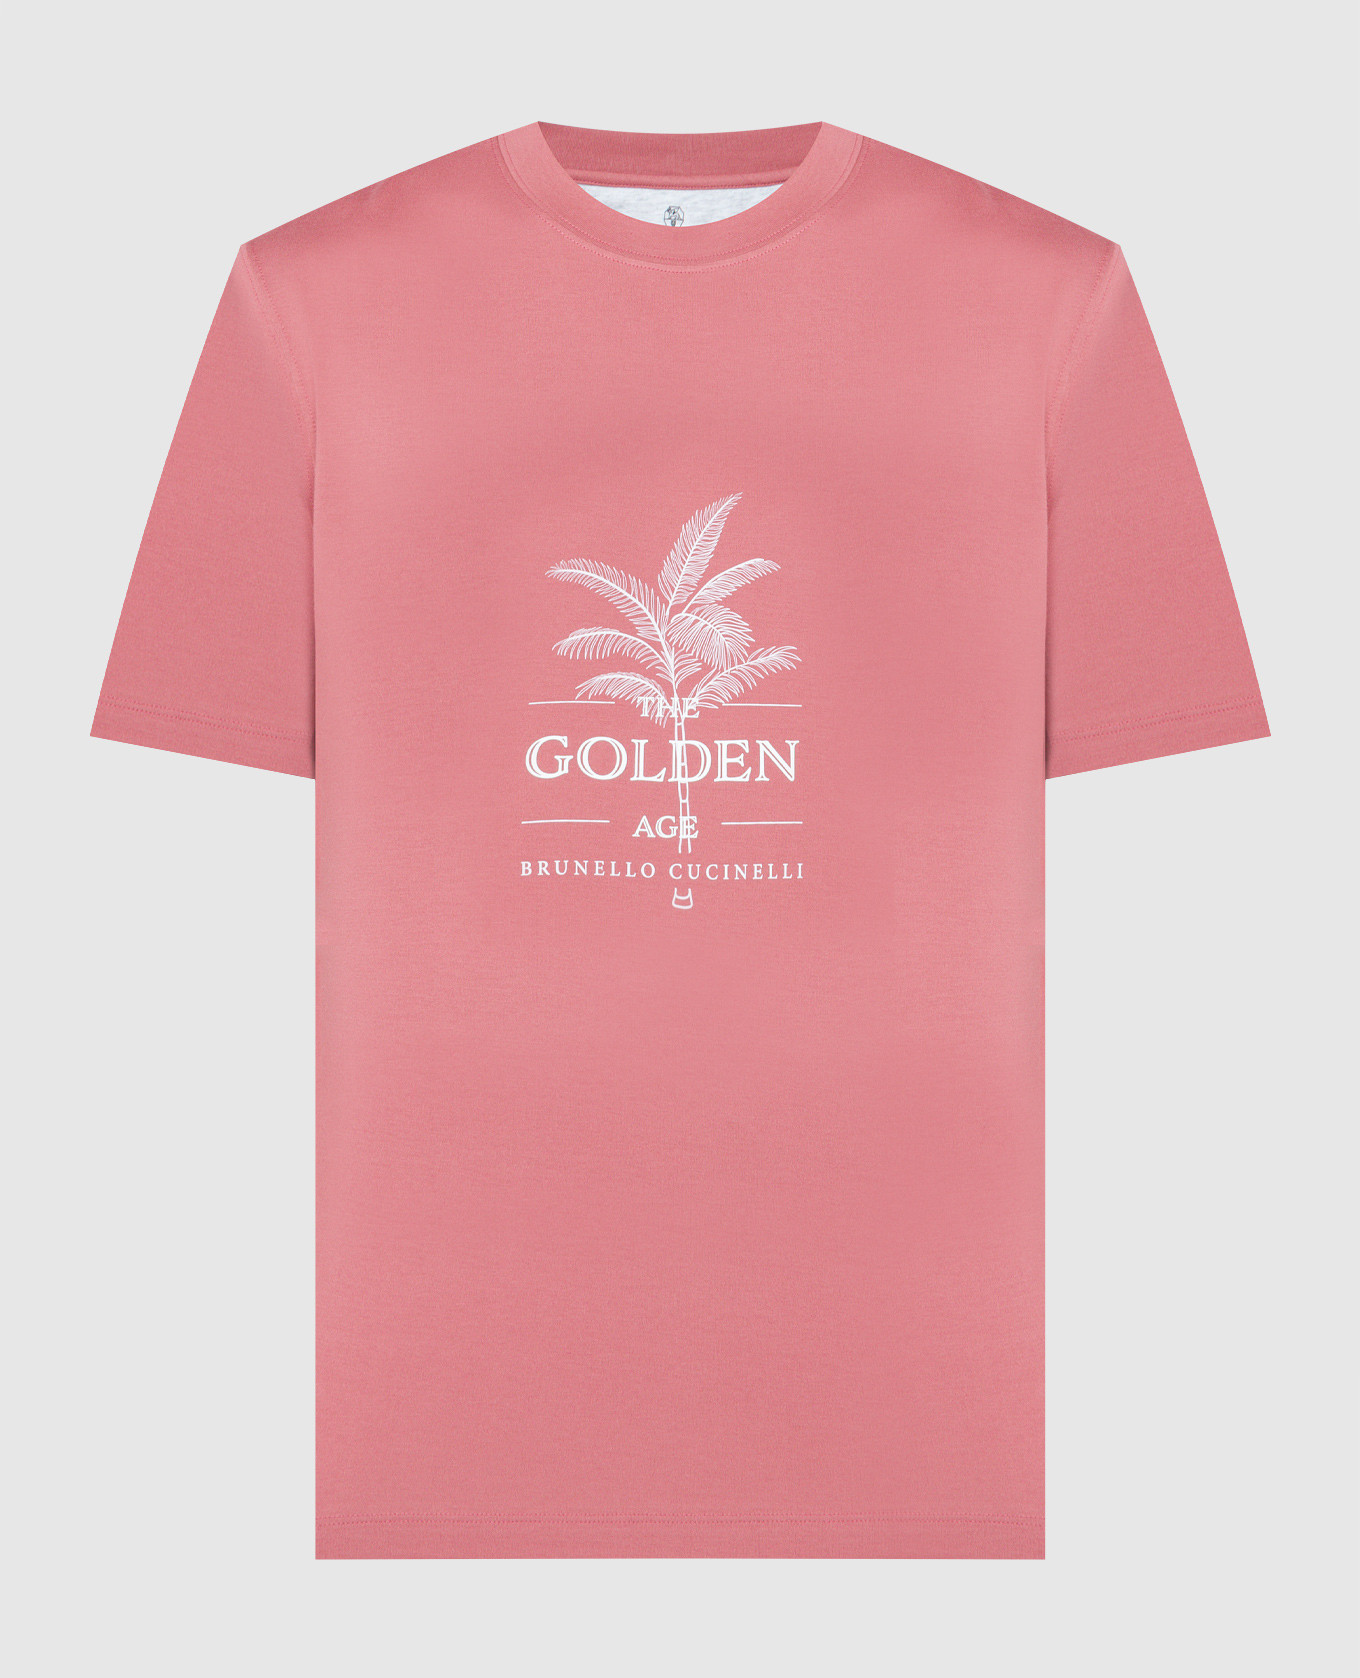 Pink t-shirt with logo print